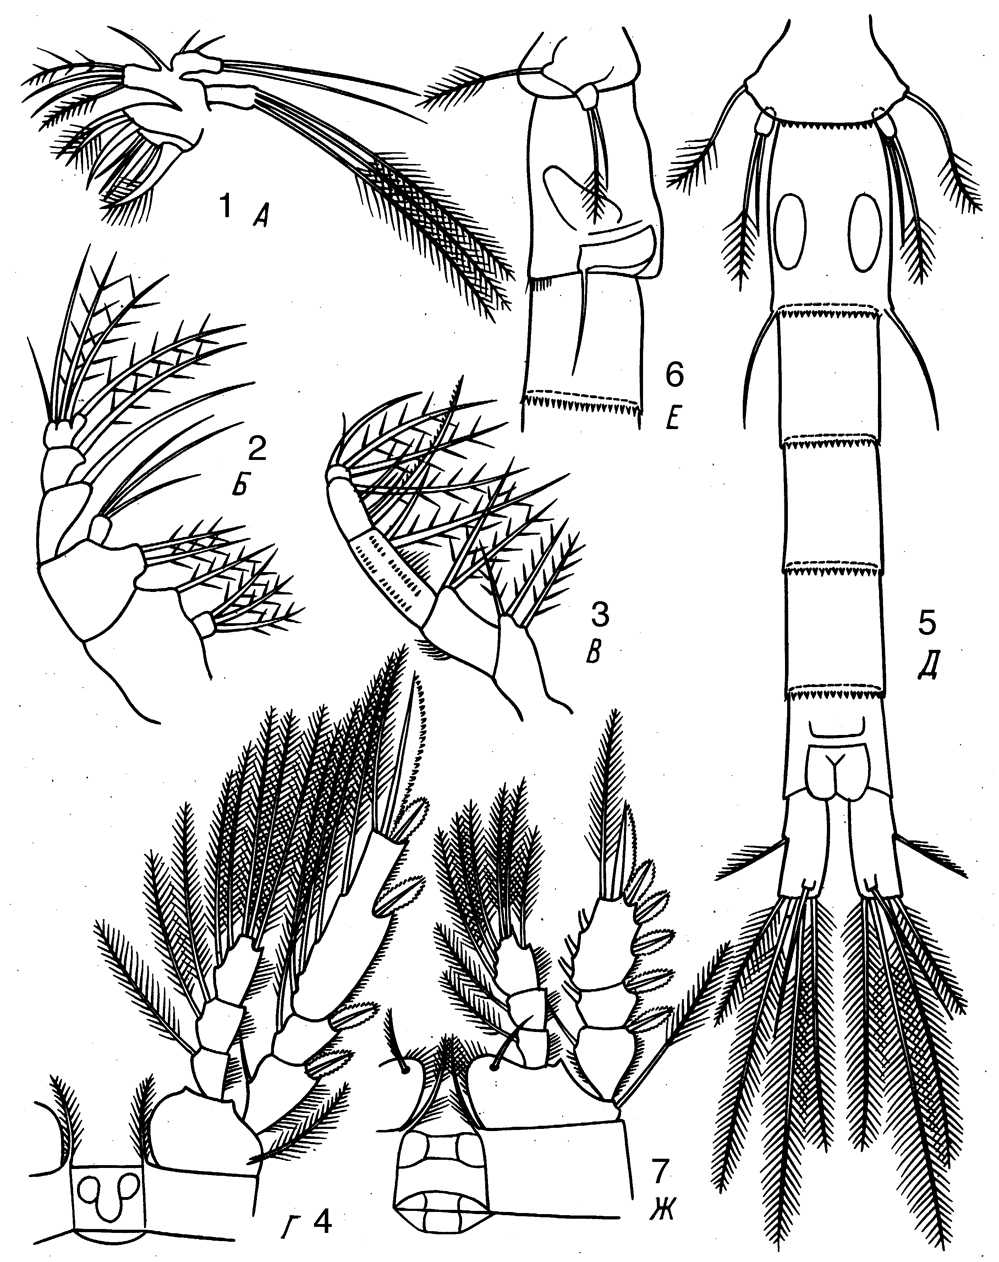 Species Dioithona rigida - Plate 7 of morphological figures